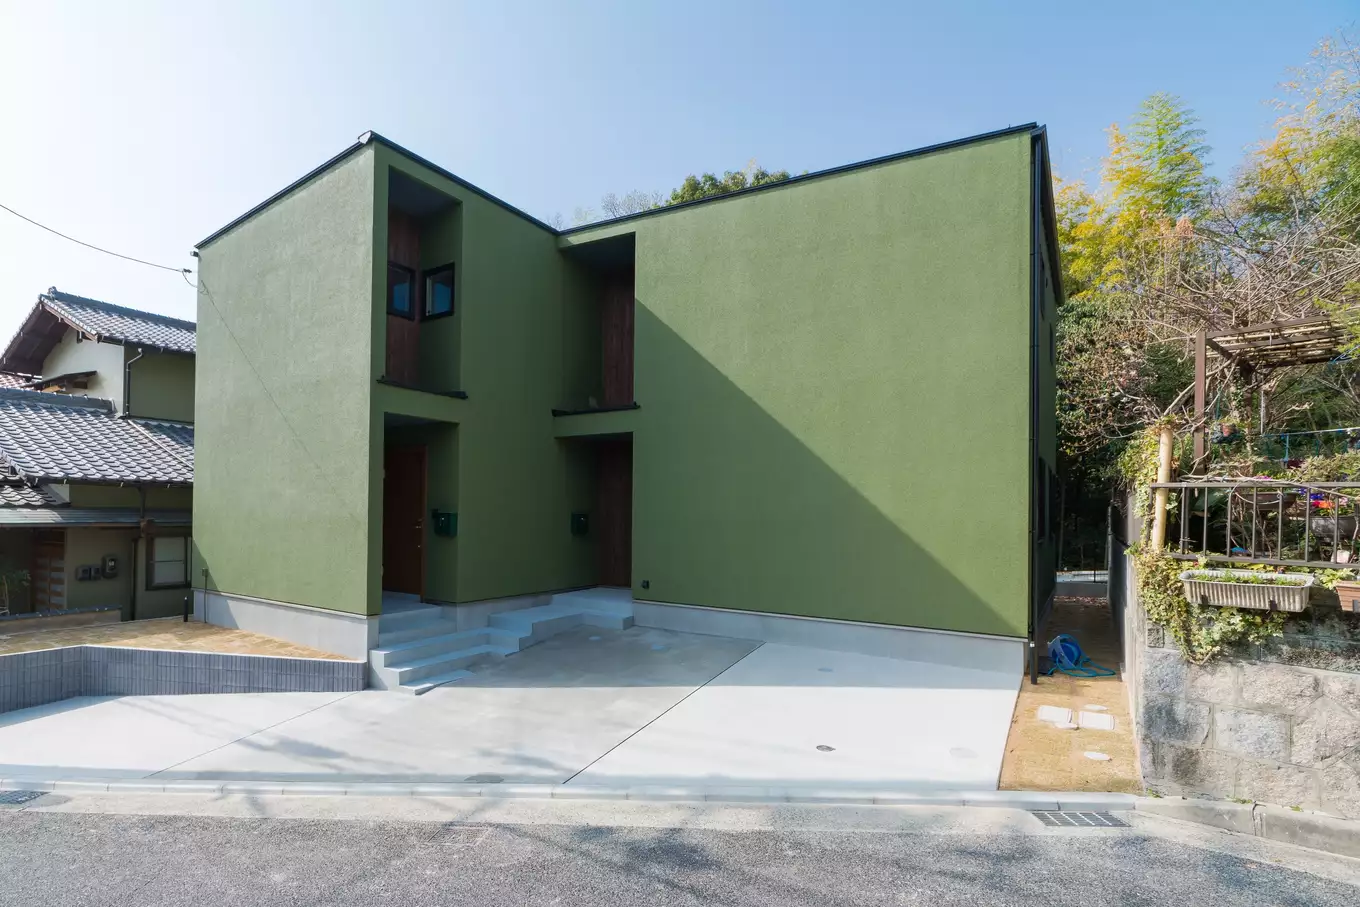 R+houseの建築事例写真。緑色の塗壁の2階建て住宅。完全分離型の二世帯住宅の為玄関が二つある。